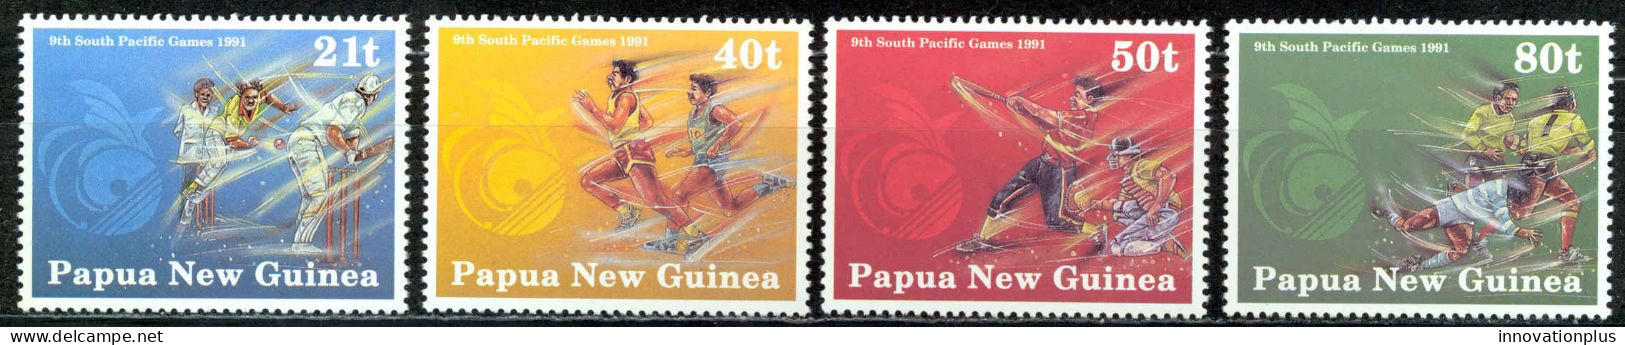 Papua New Guinea Sc# 771-774 MNH 1991 South Pacific Games - Papua New Guinea